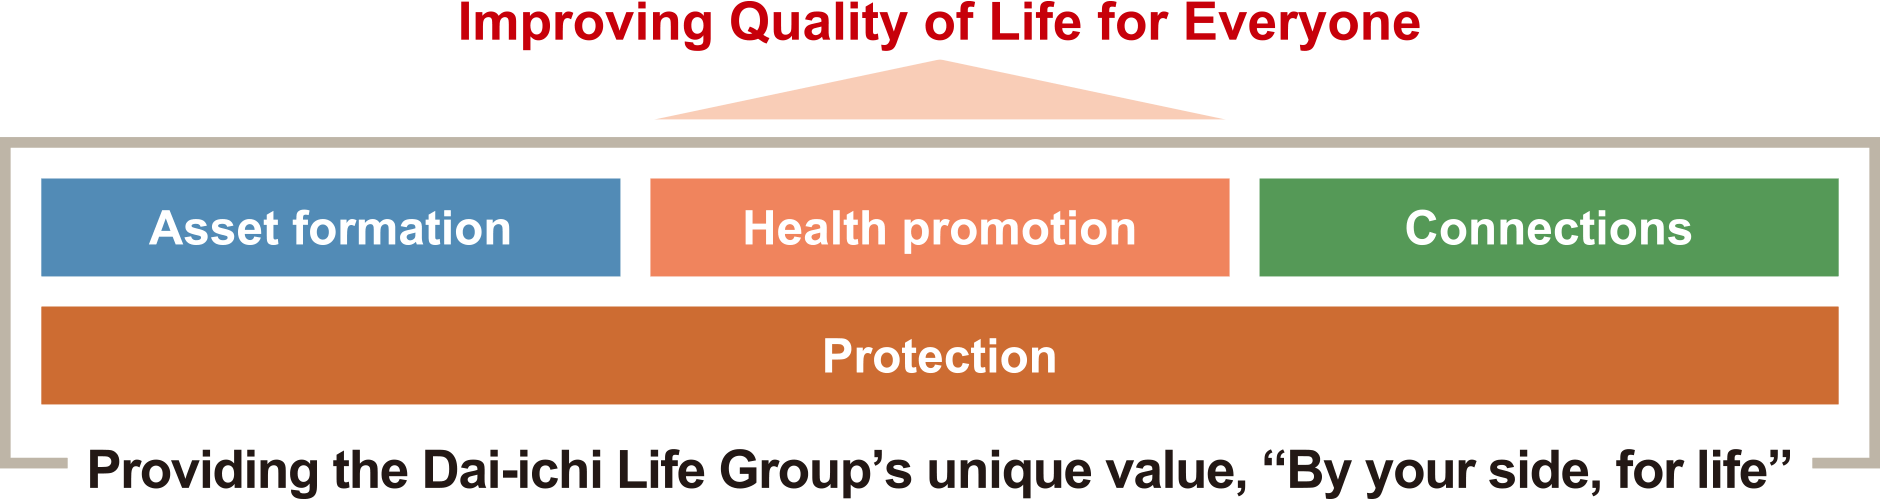 figure: Improving Quality of Life